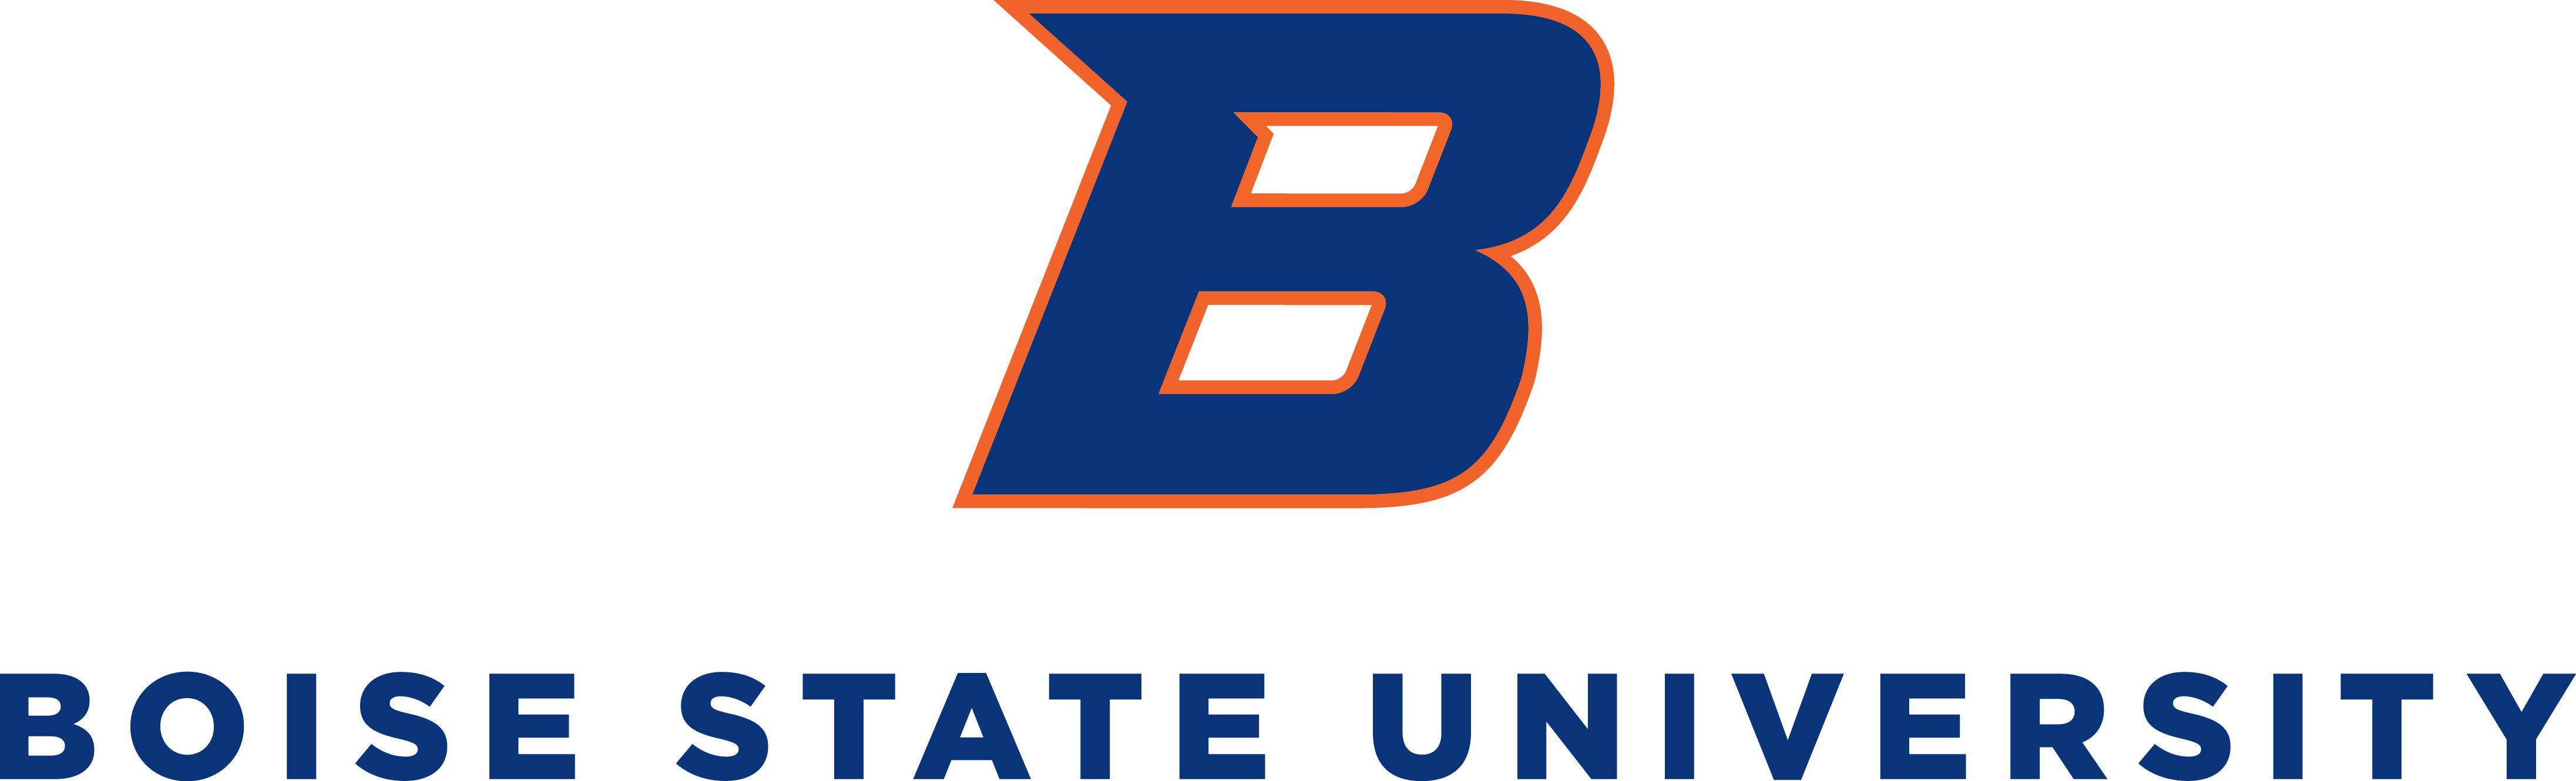 Blue B Logo - Logo Download Library